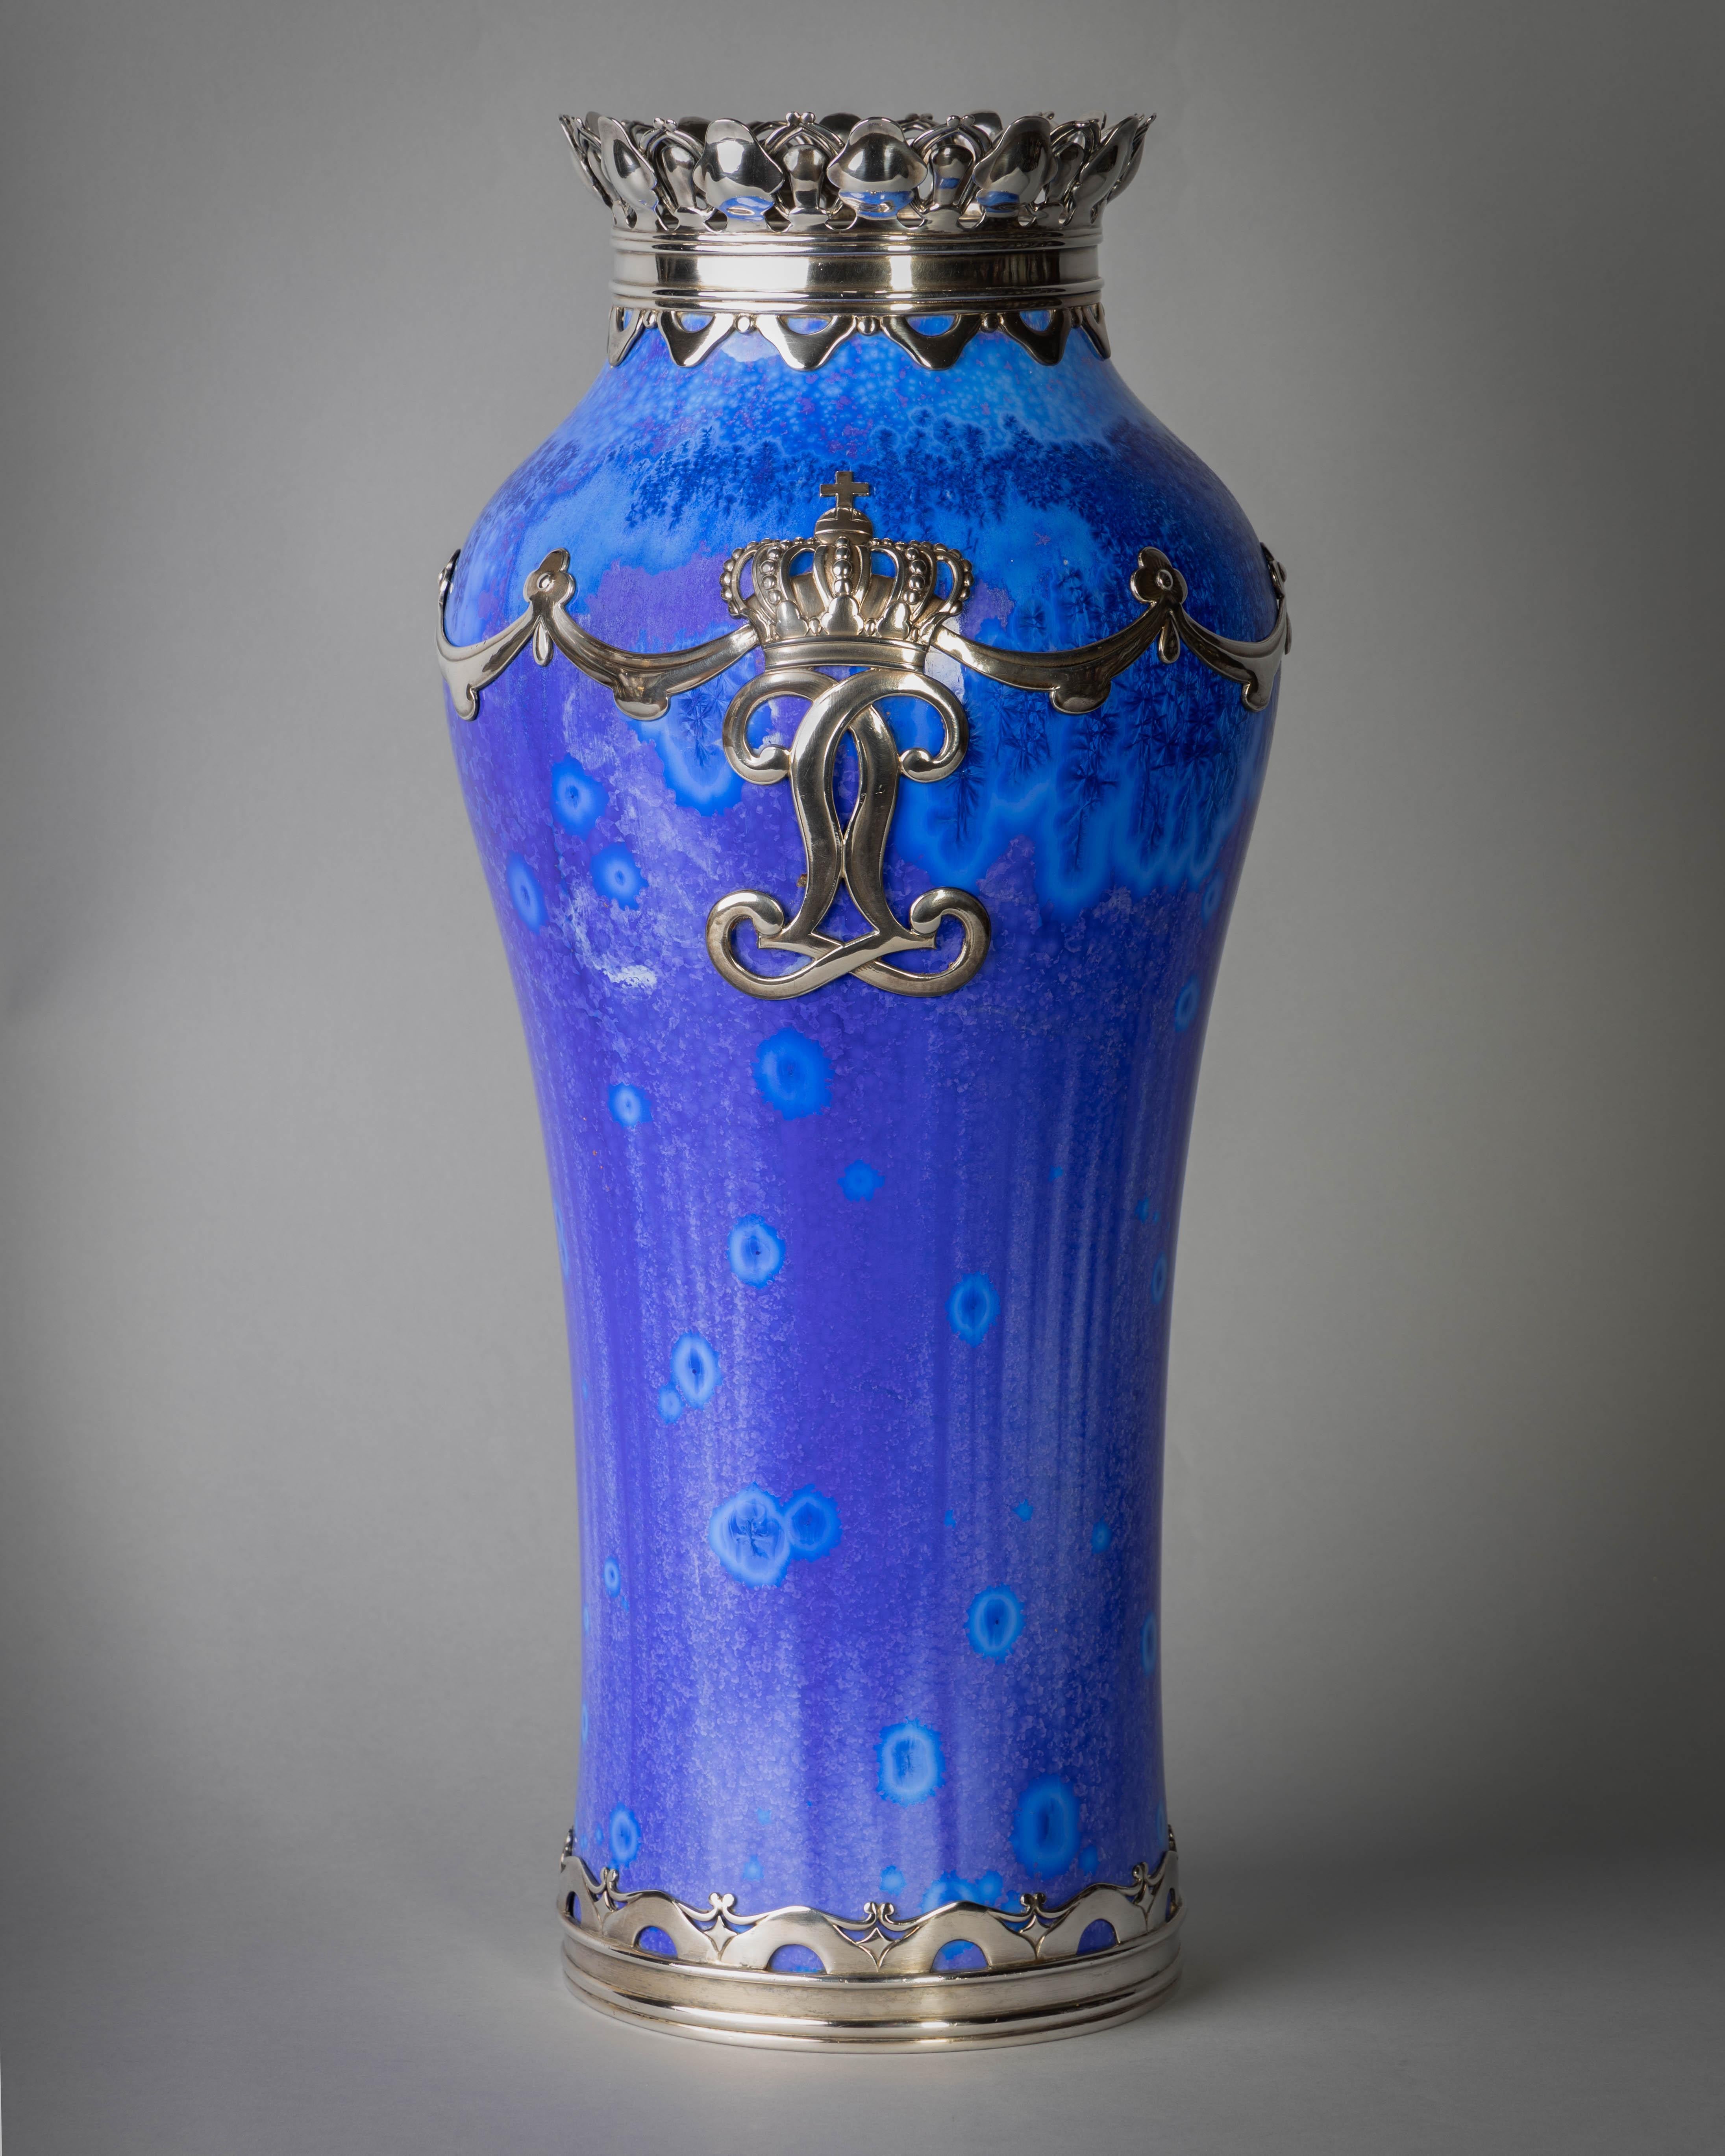 Danish Silver Mounted Royal Copenhagen Crystalline Royal Presentation Vase, Dated 1915 For Sale